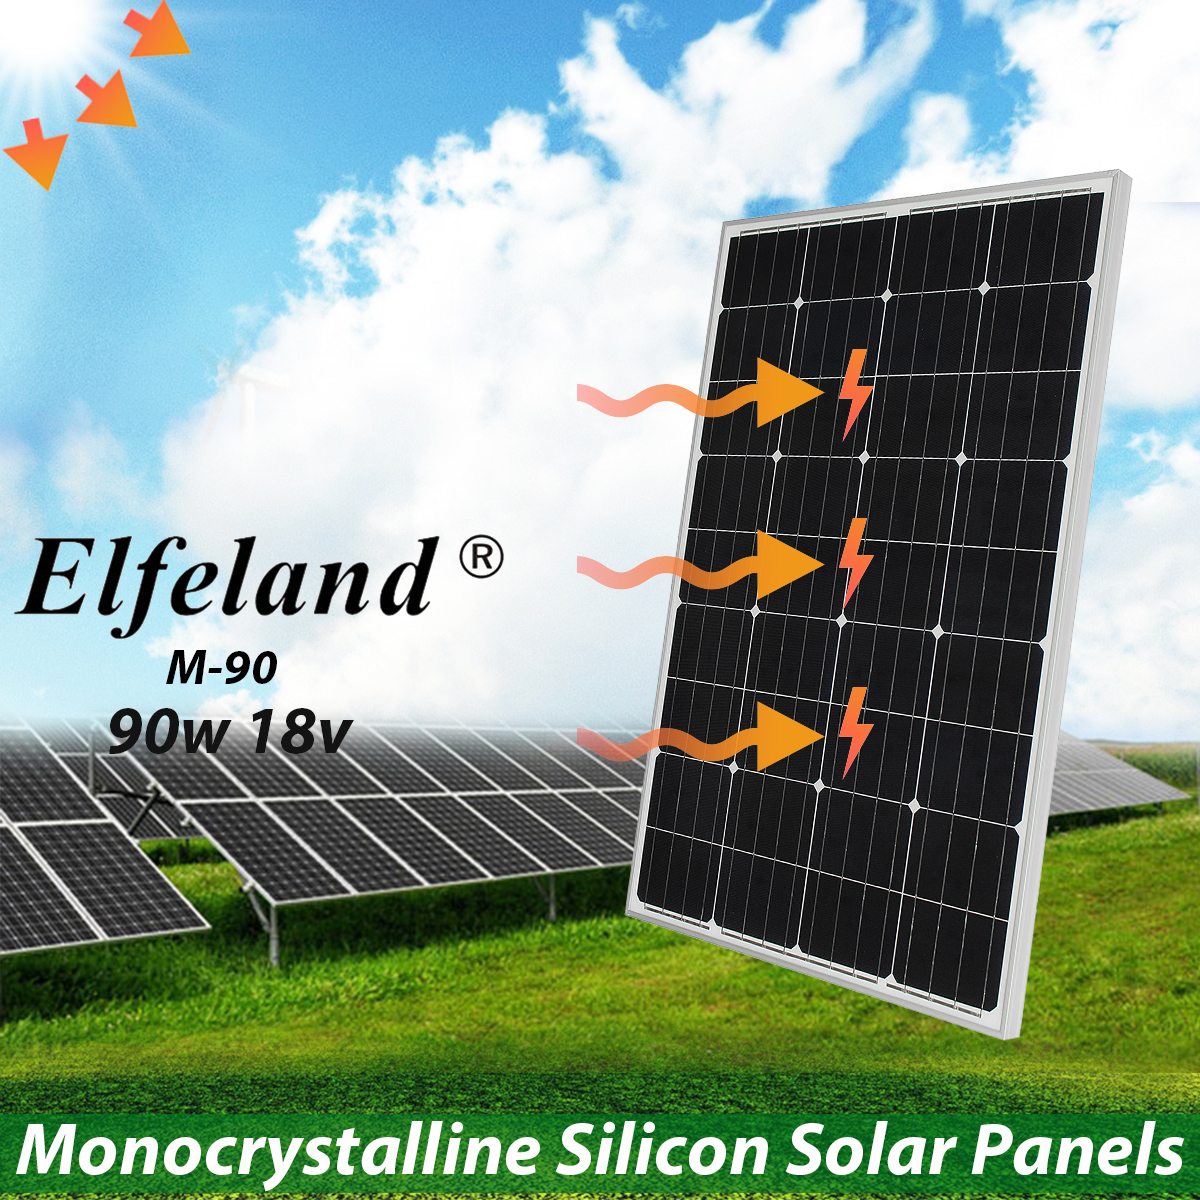 Elfelandreg-M-90-90W-18V-High-Effefficiency-Flexible-Monocrystalline-Silicon-Solar-Panel-1275536-1